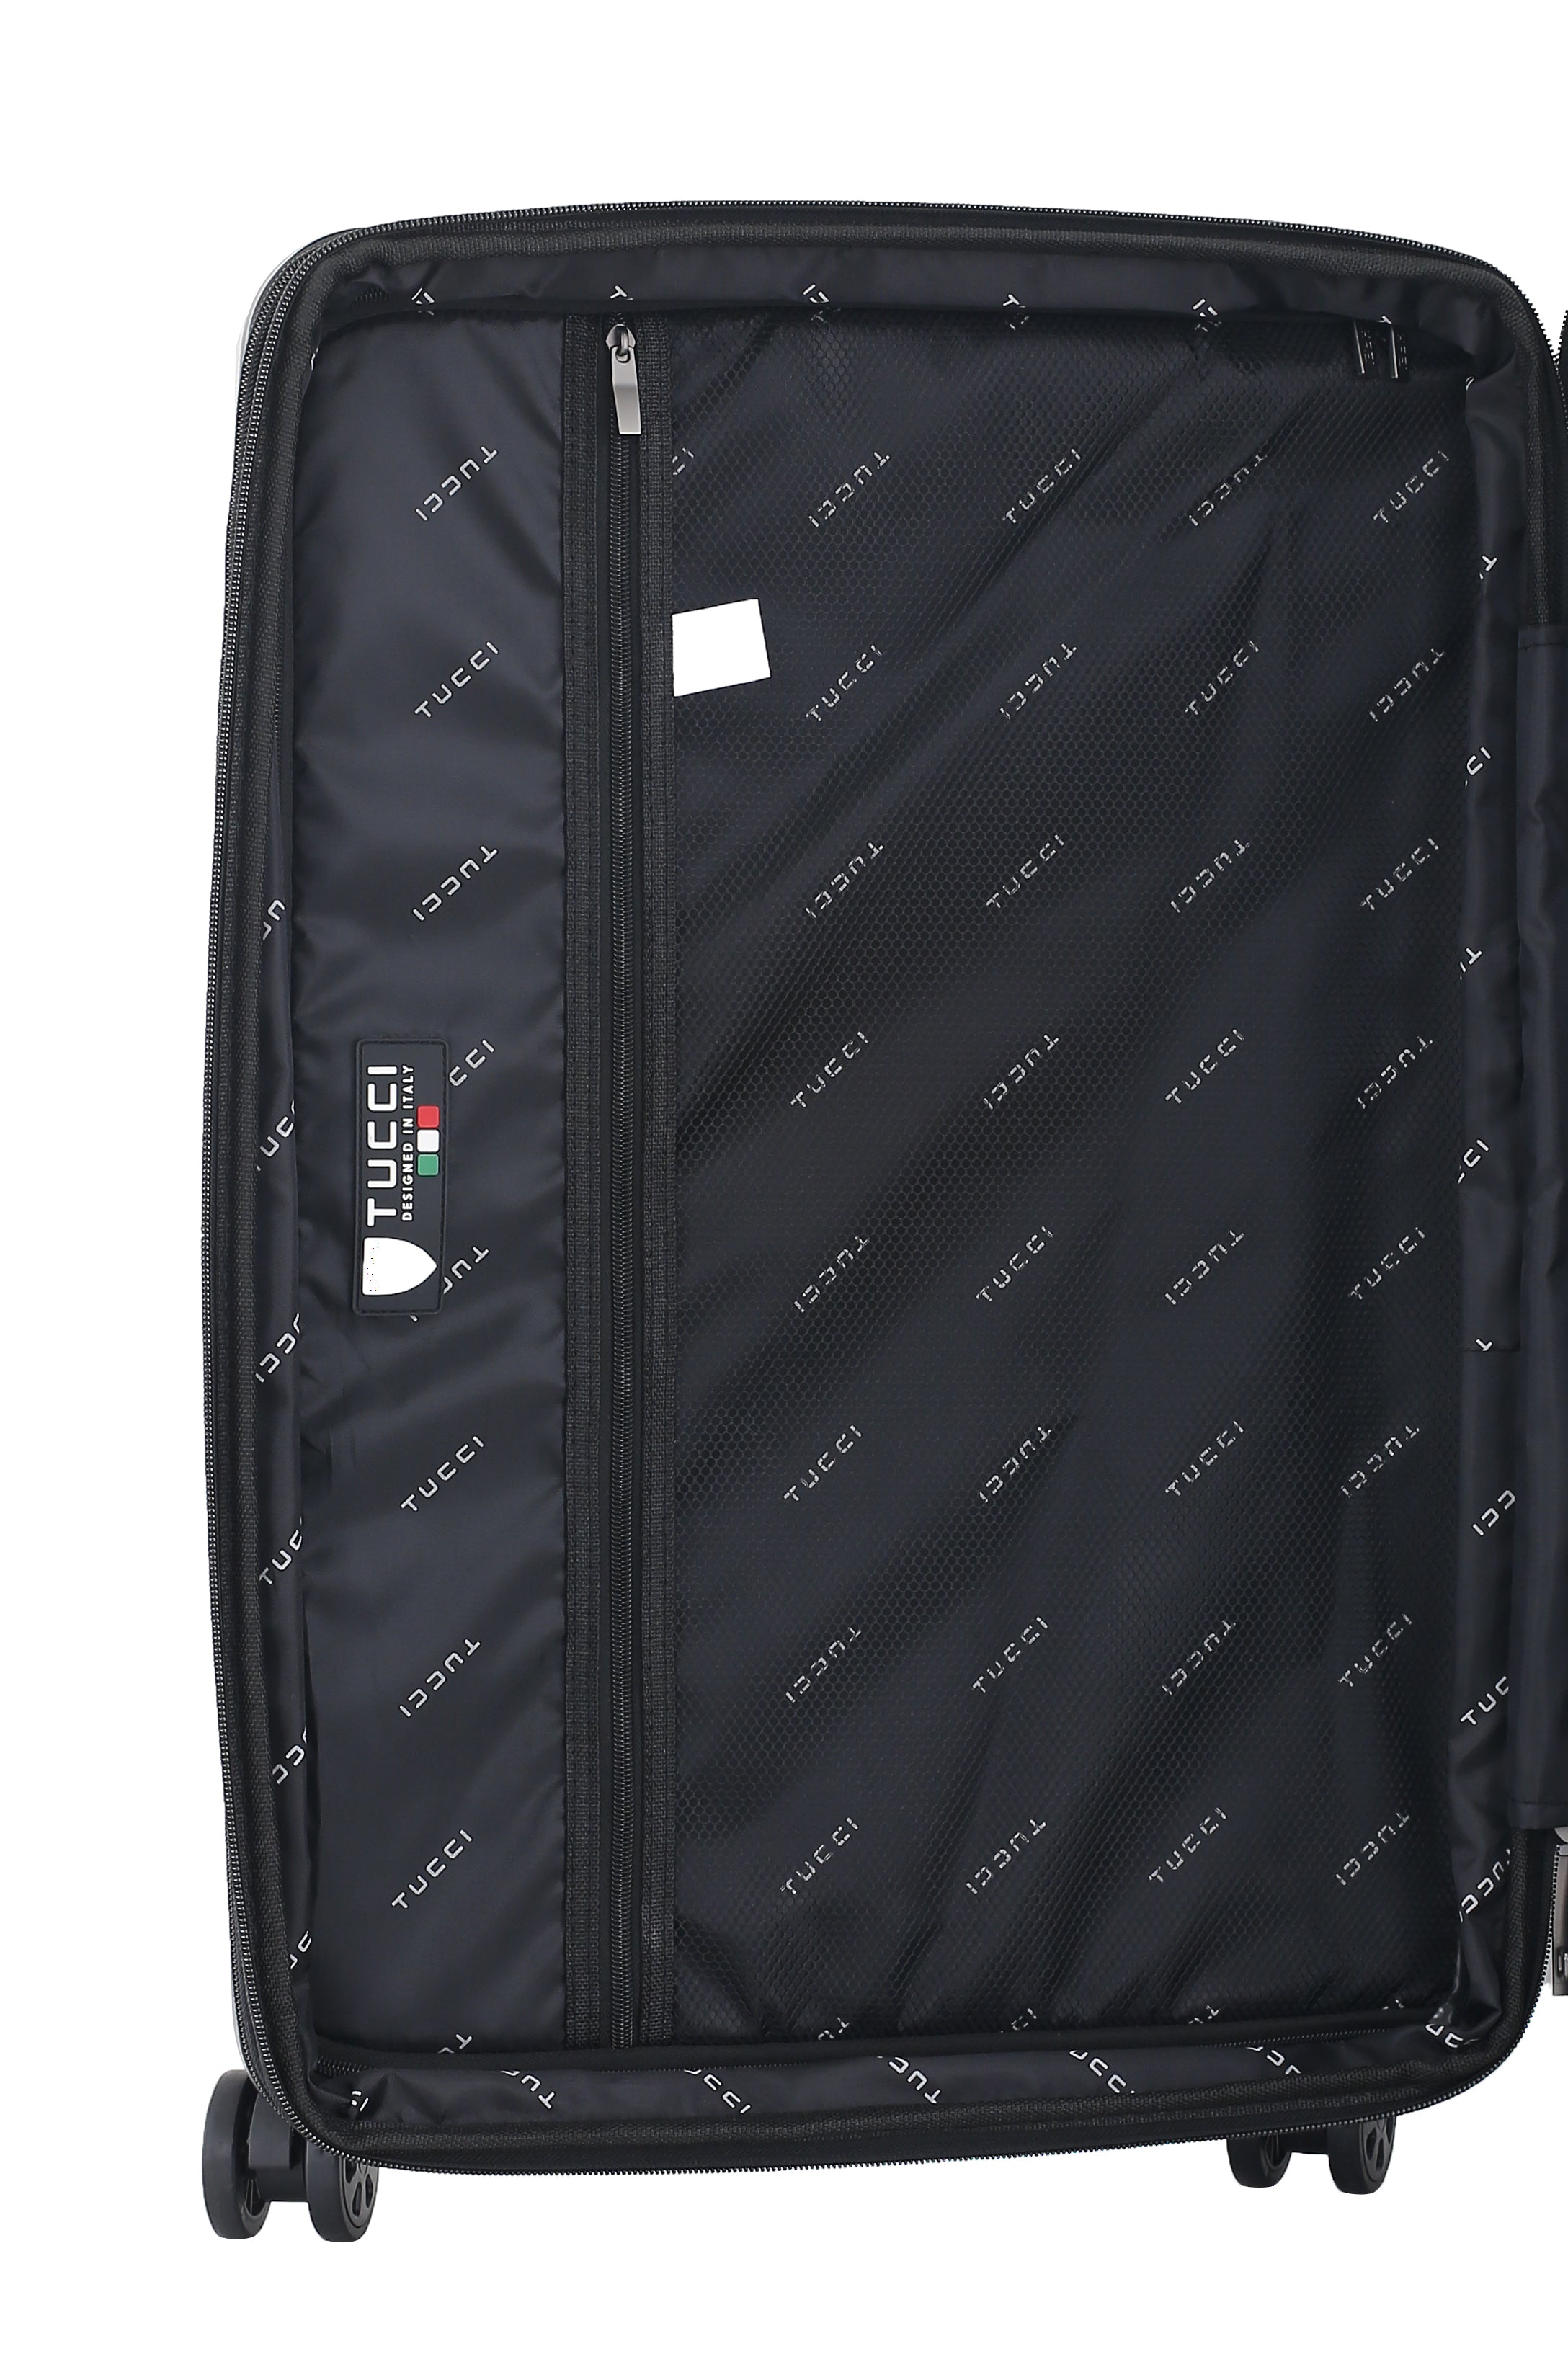 TUCCI Dinero Money Man 28" Luggage Suitcase